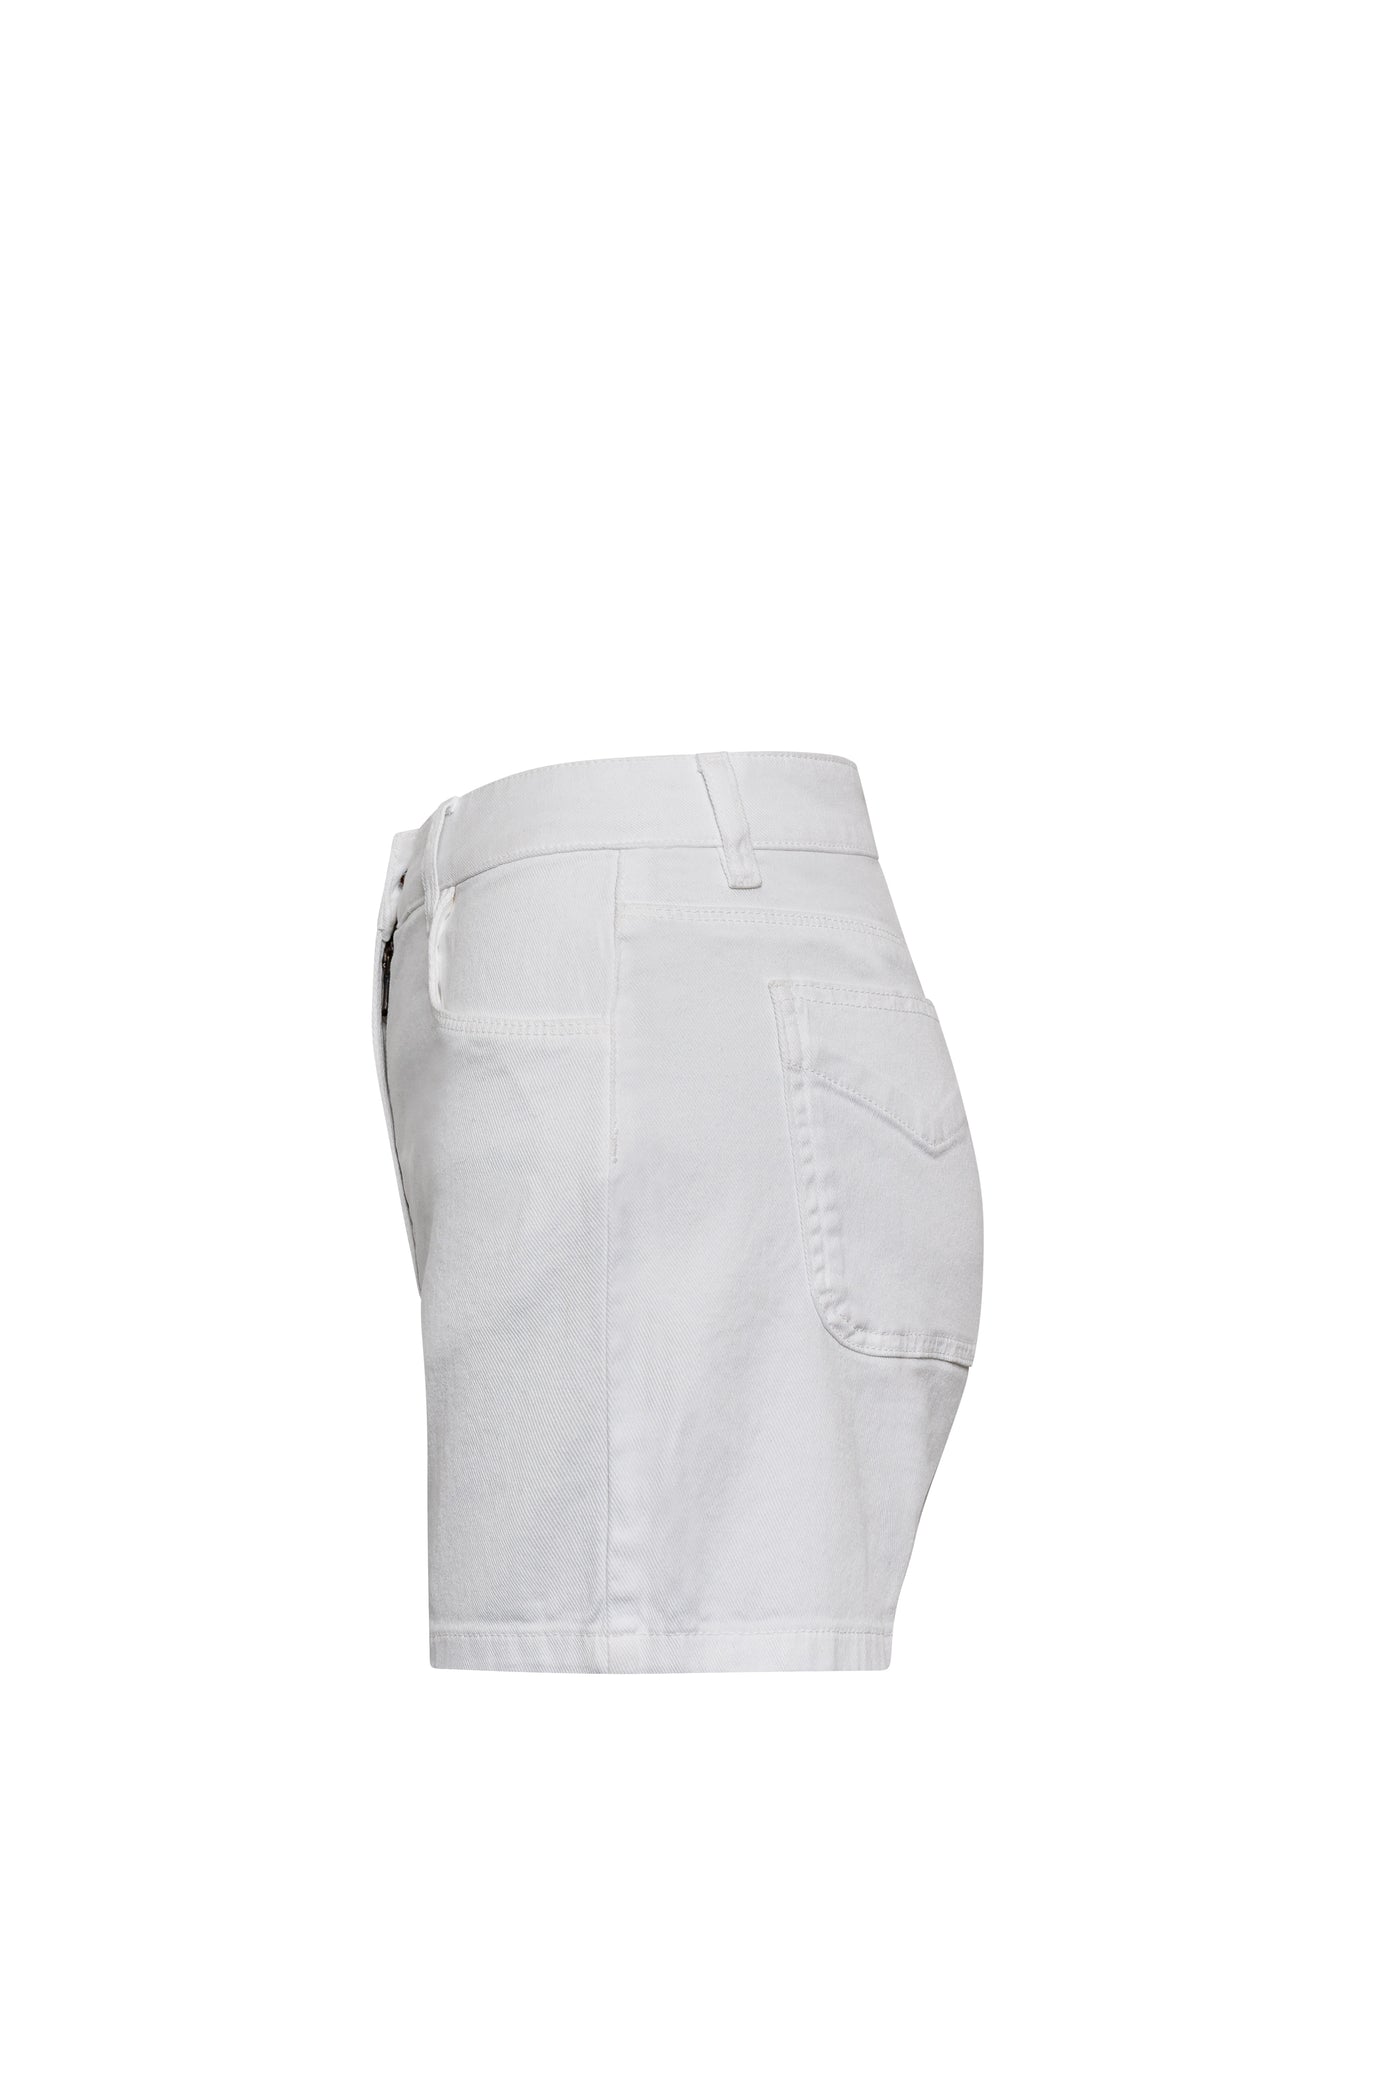 Women's 5 pocket shorts